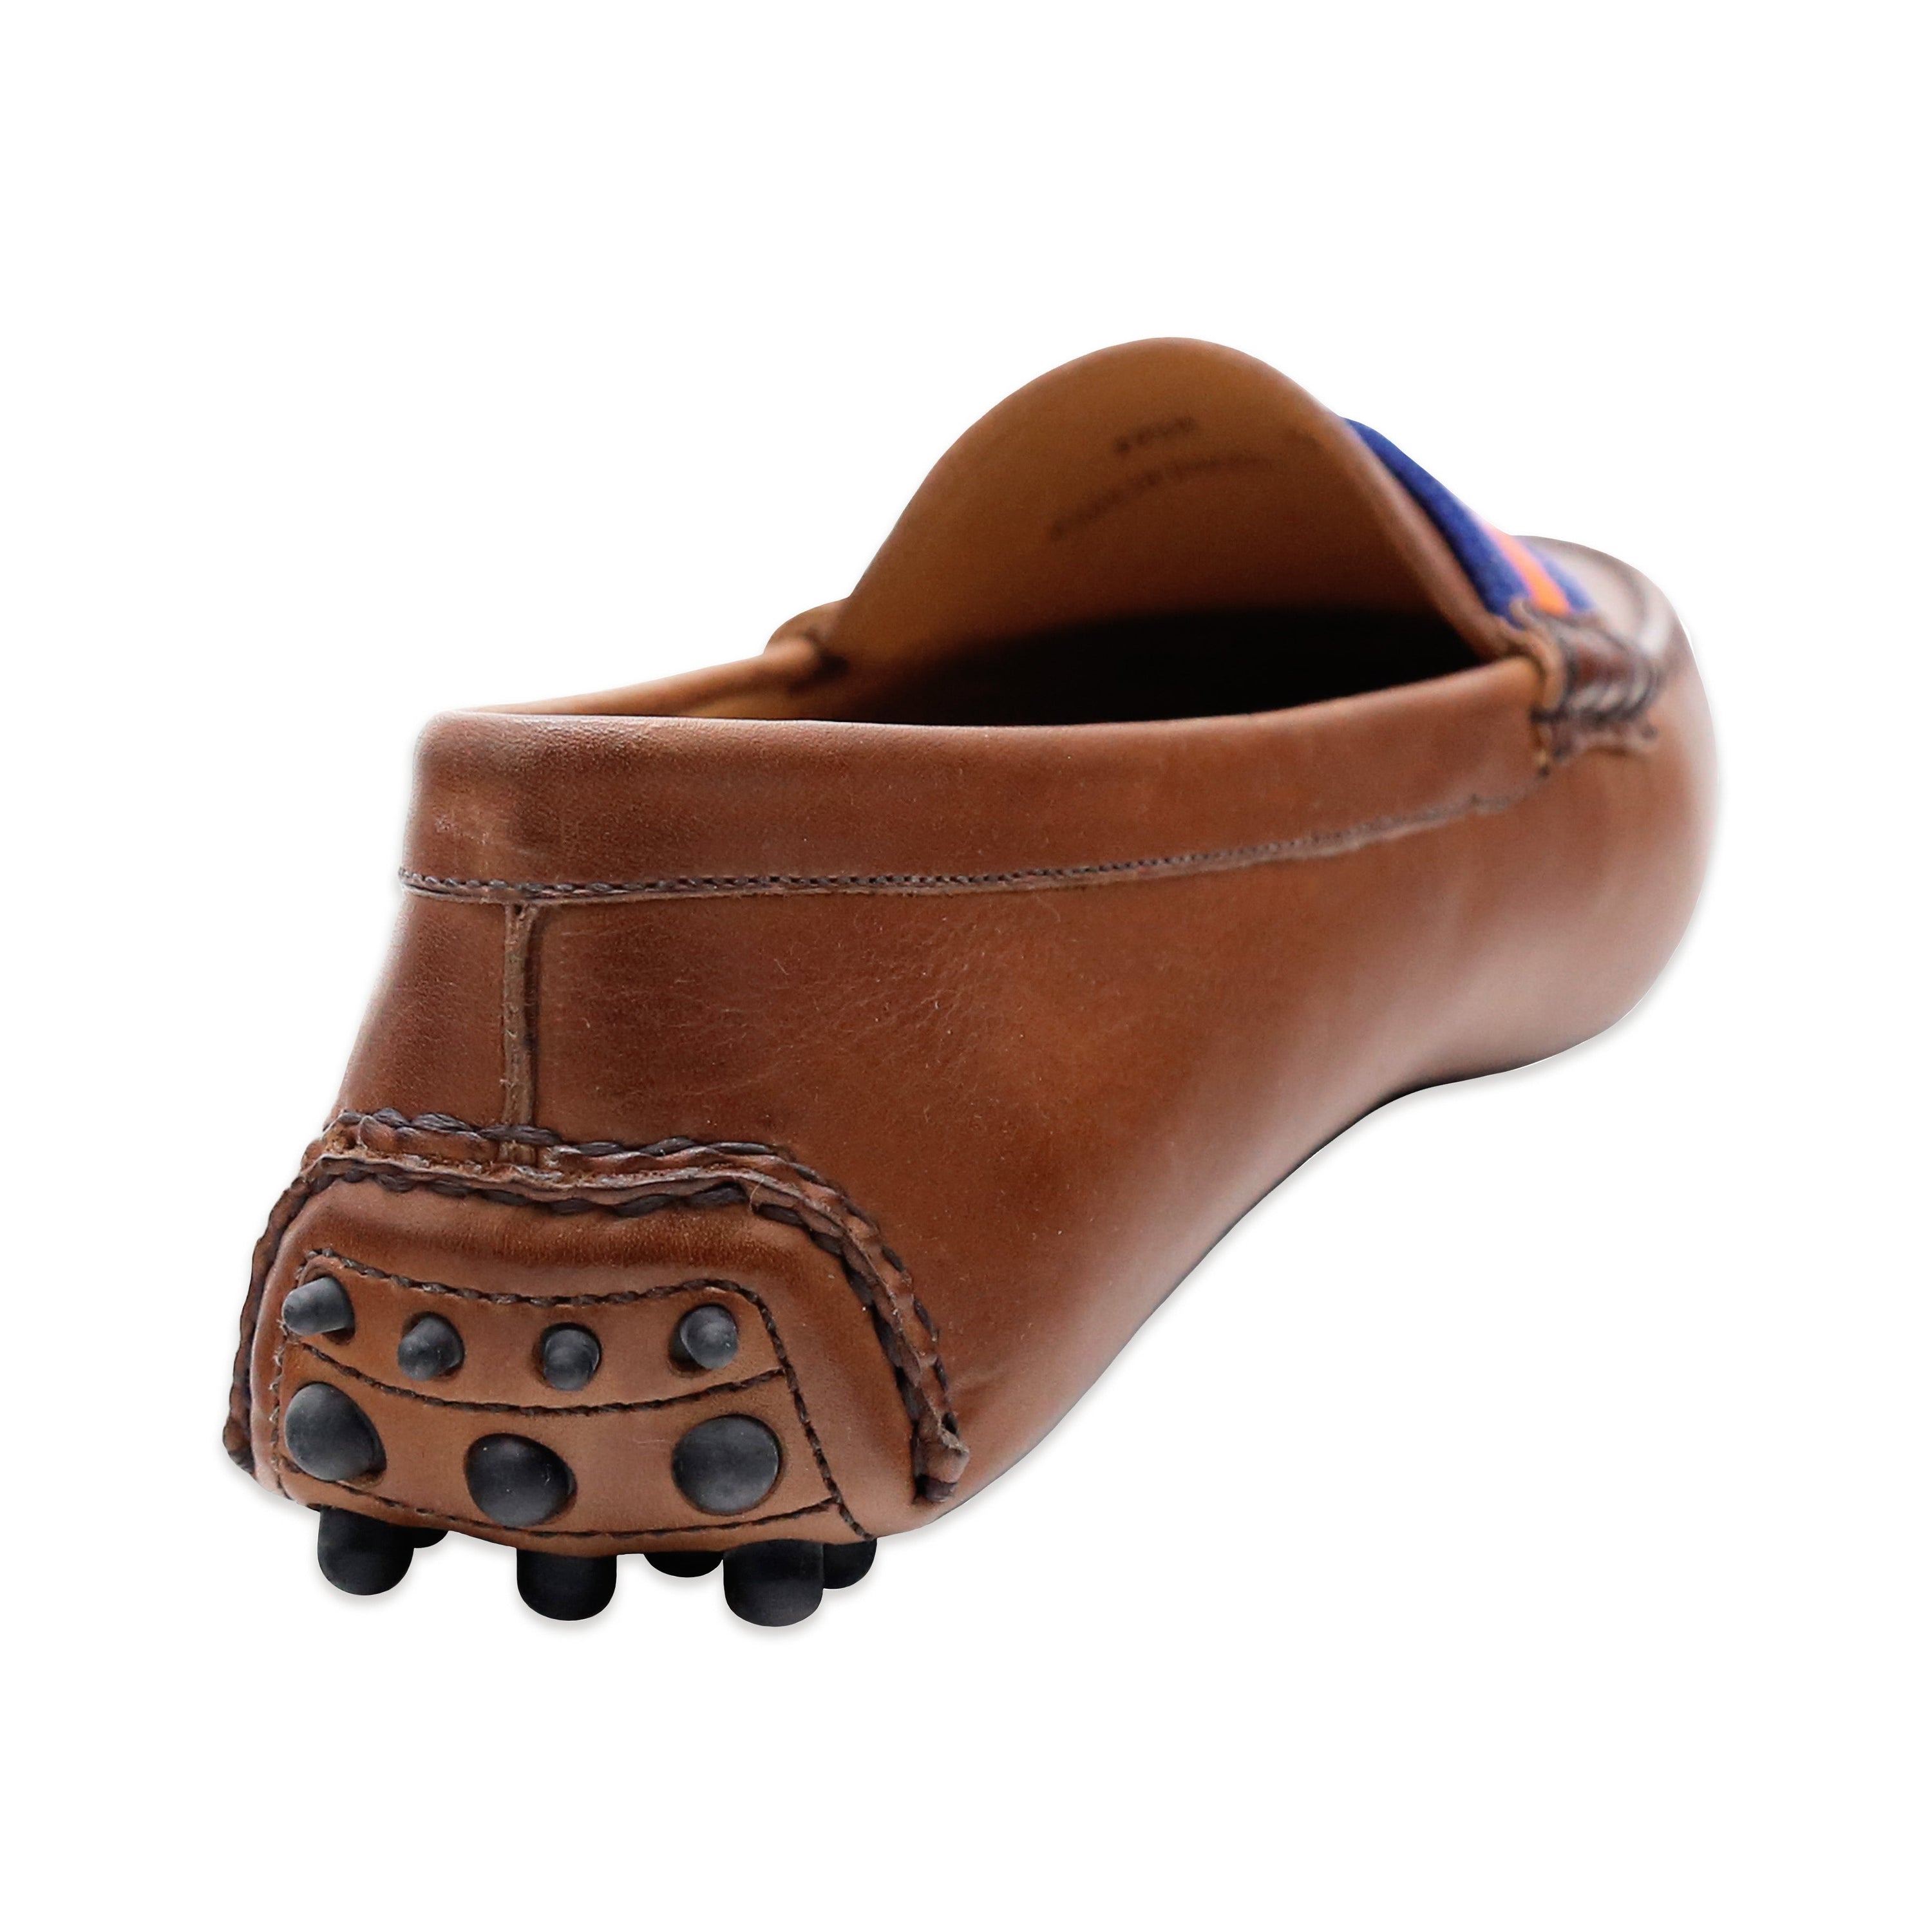 Kansas Surcingle Driving Shoes (Red-Cobalt) (Chestnut Leather-Logo)